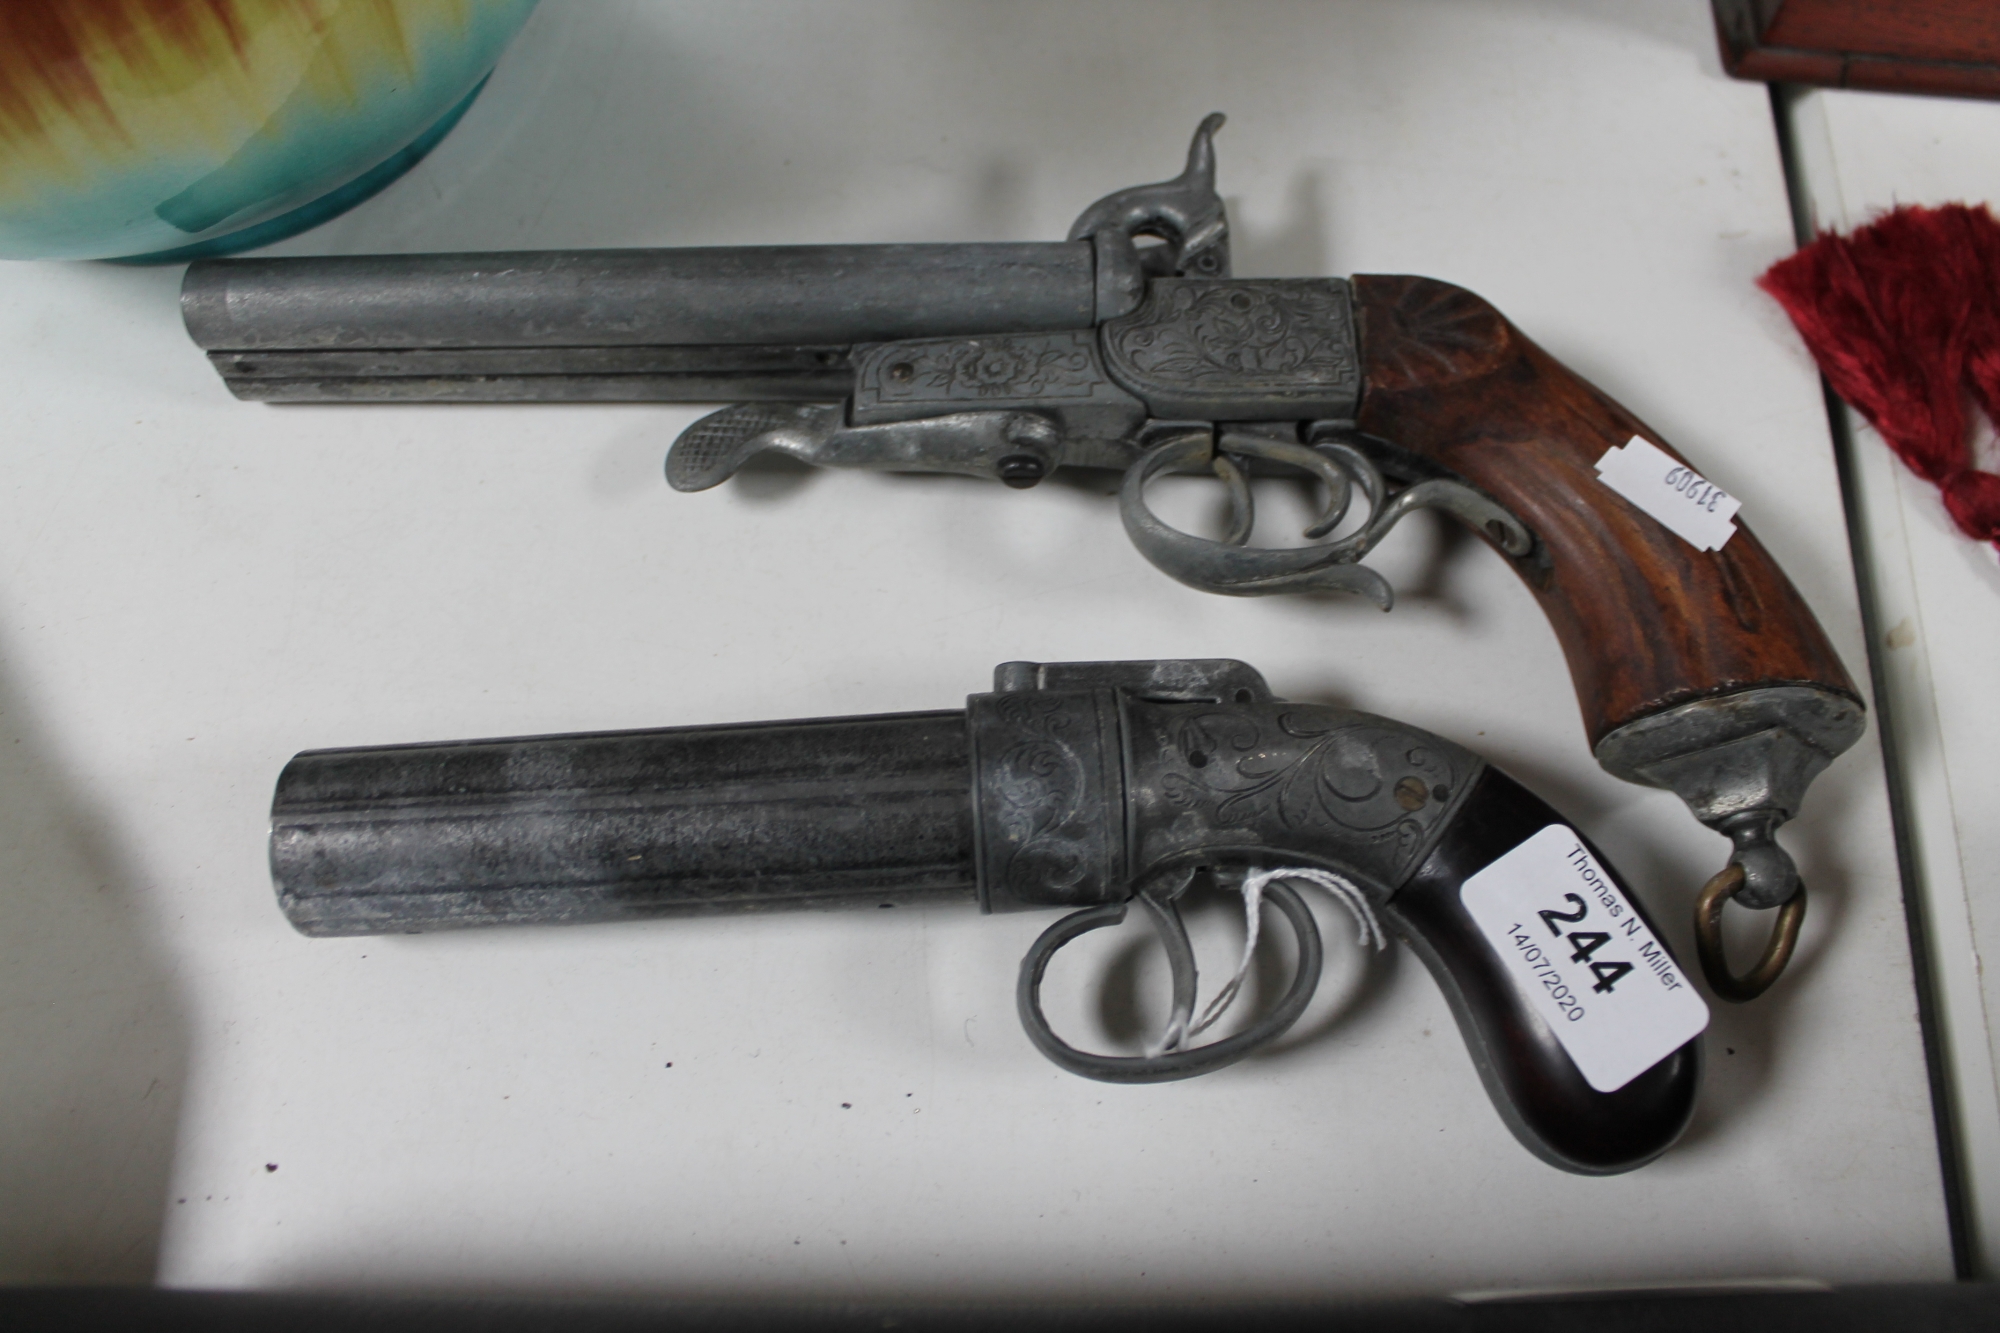 Two ornamental pistols